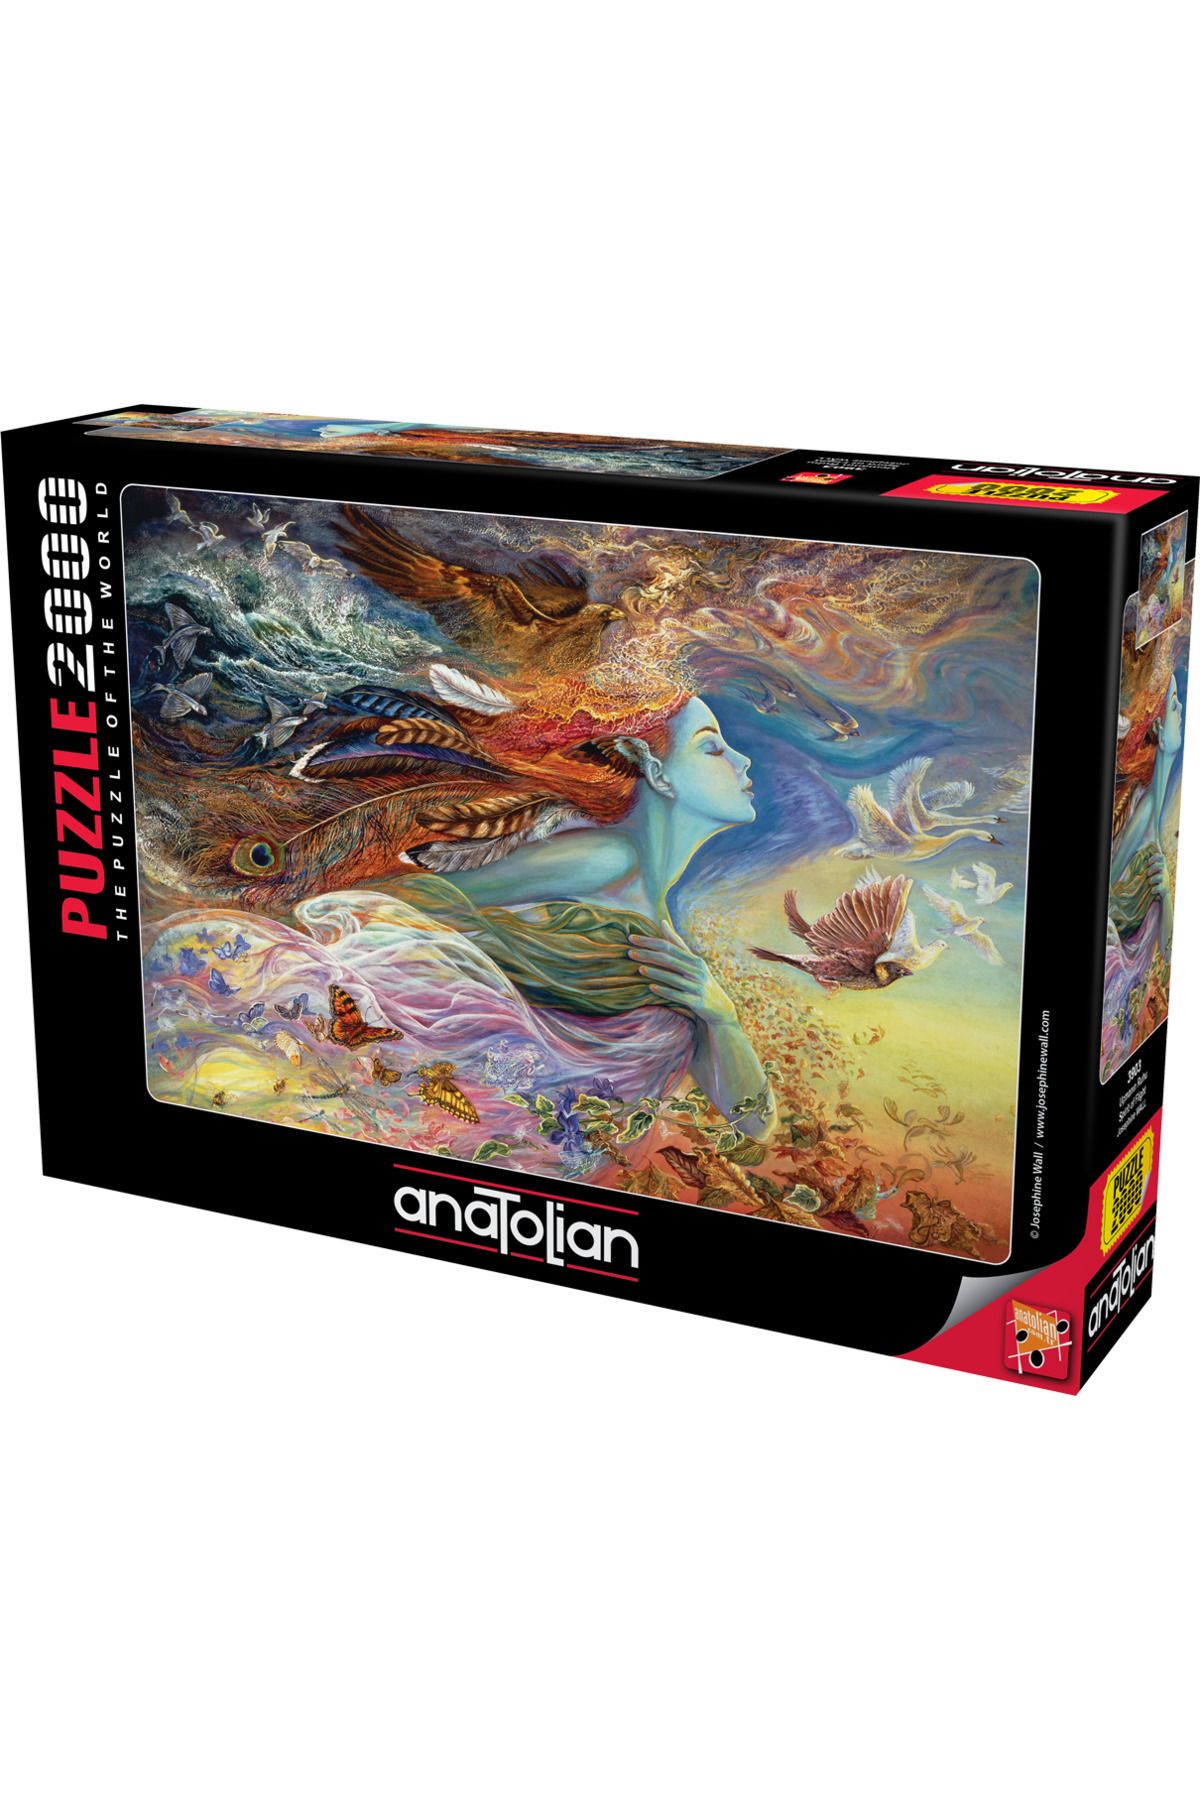 Anatolian Puzzle 2000 Parçalık Puzzle / Uçmanın Ruhu - Kod:3903